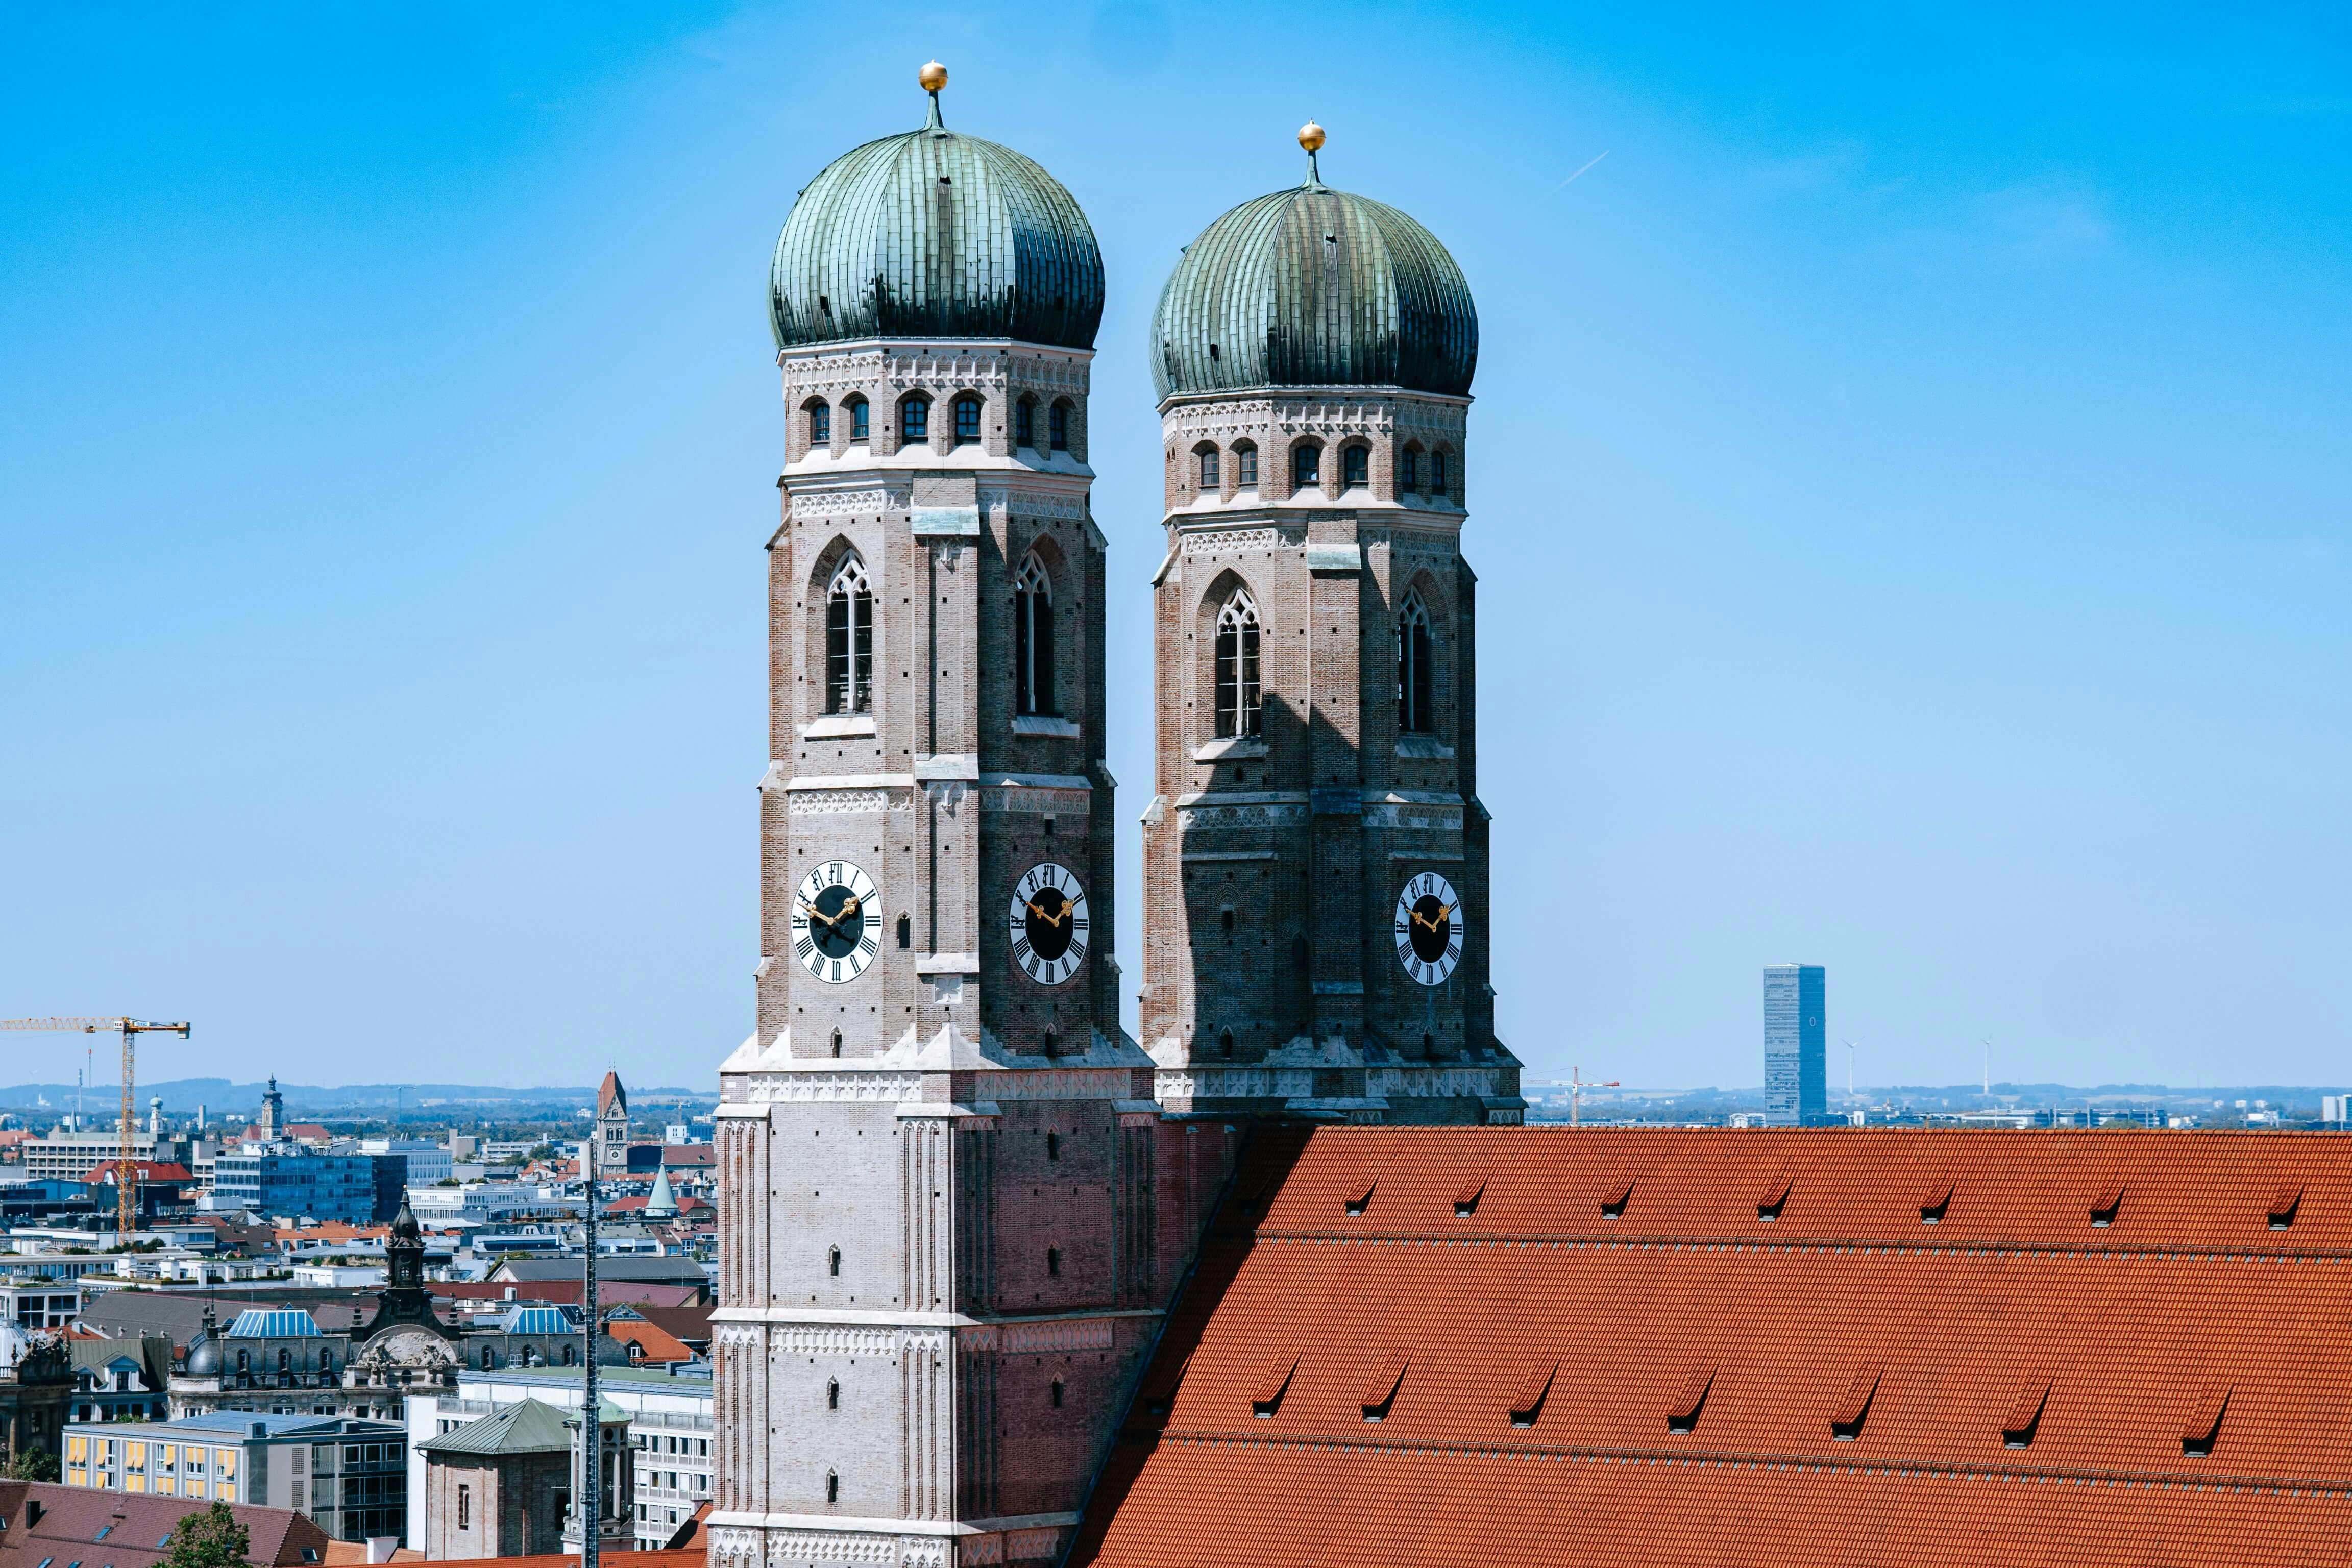 frauenkirche-mnichov